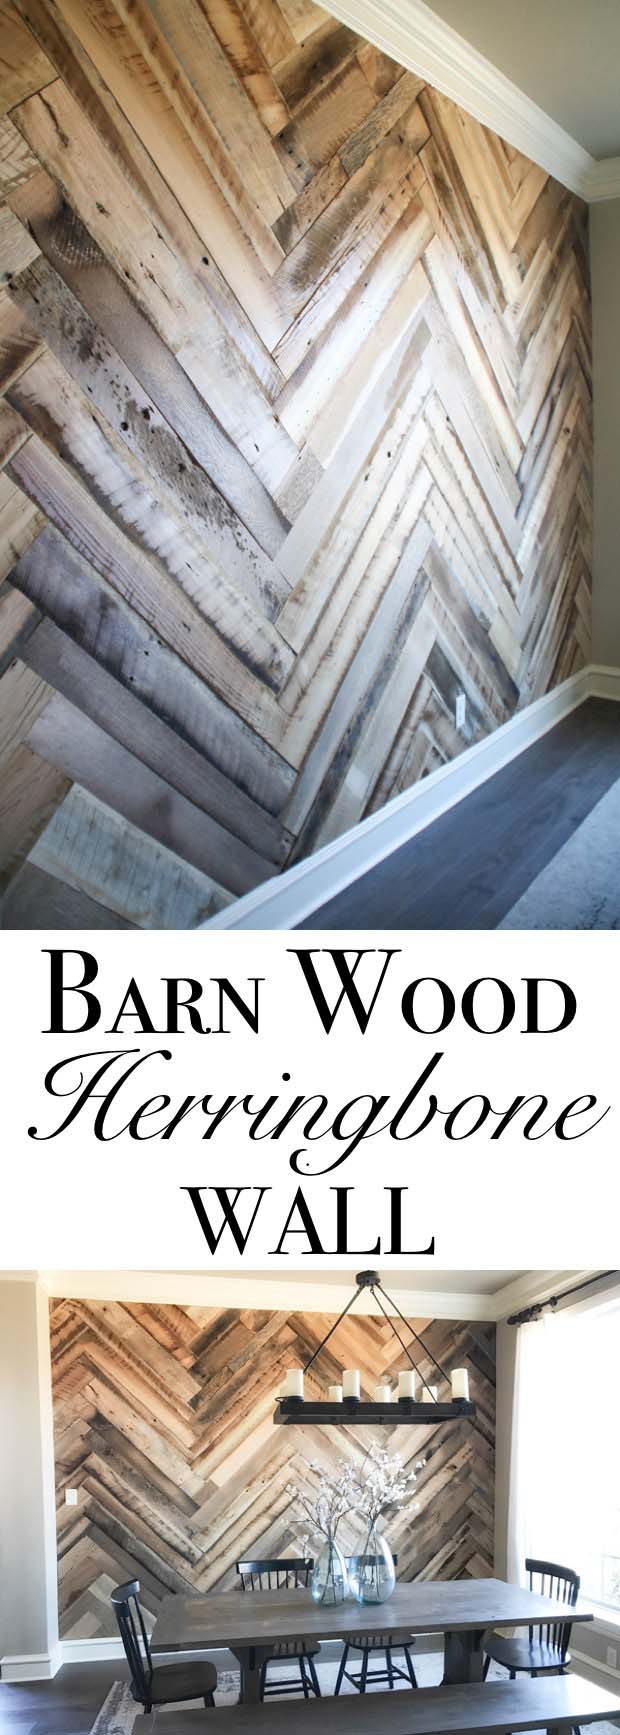 DIY Barn Wood Herringbone Wall #decorhomeideas